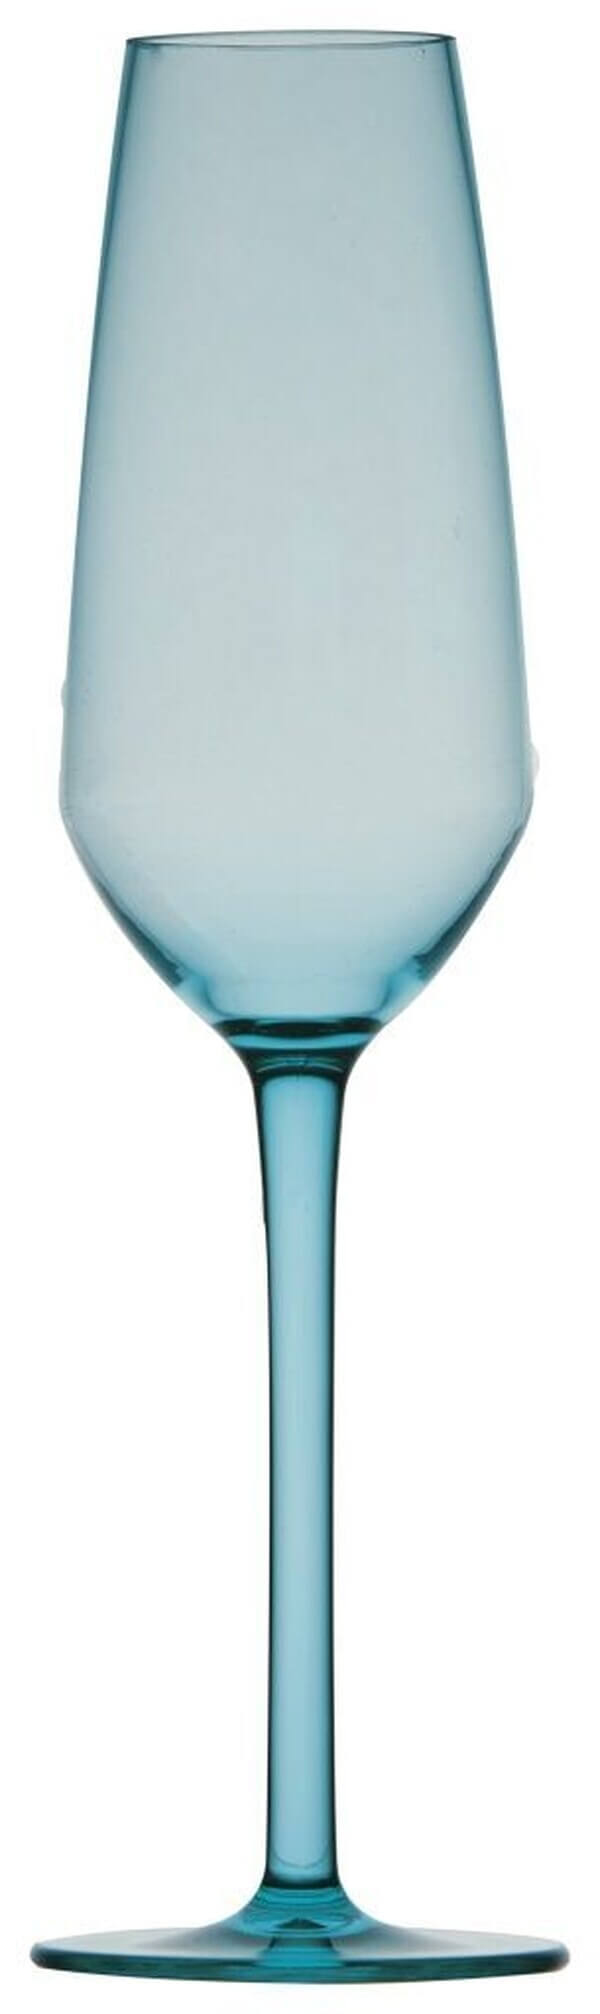 Square Champagneglas Turquoise